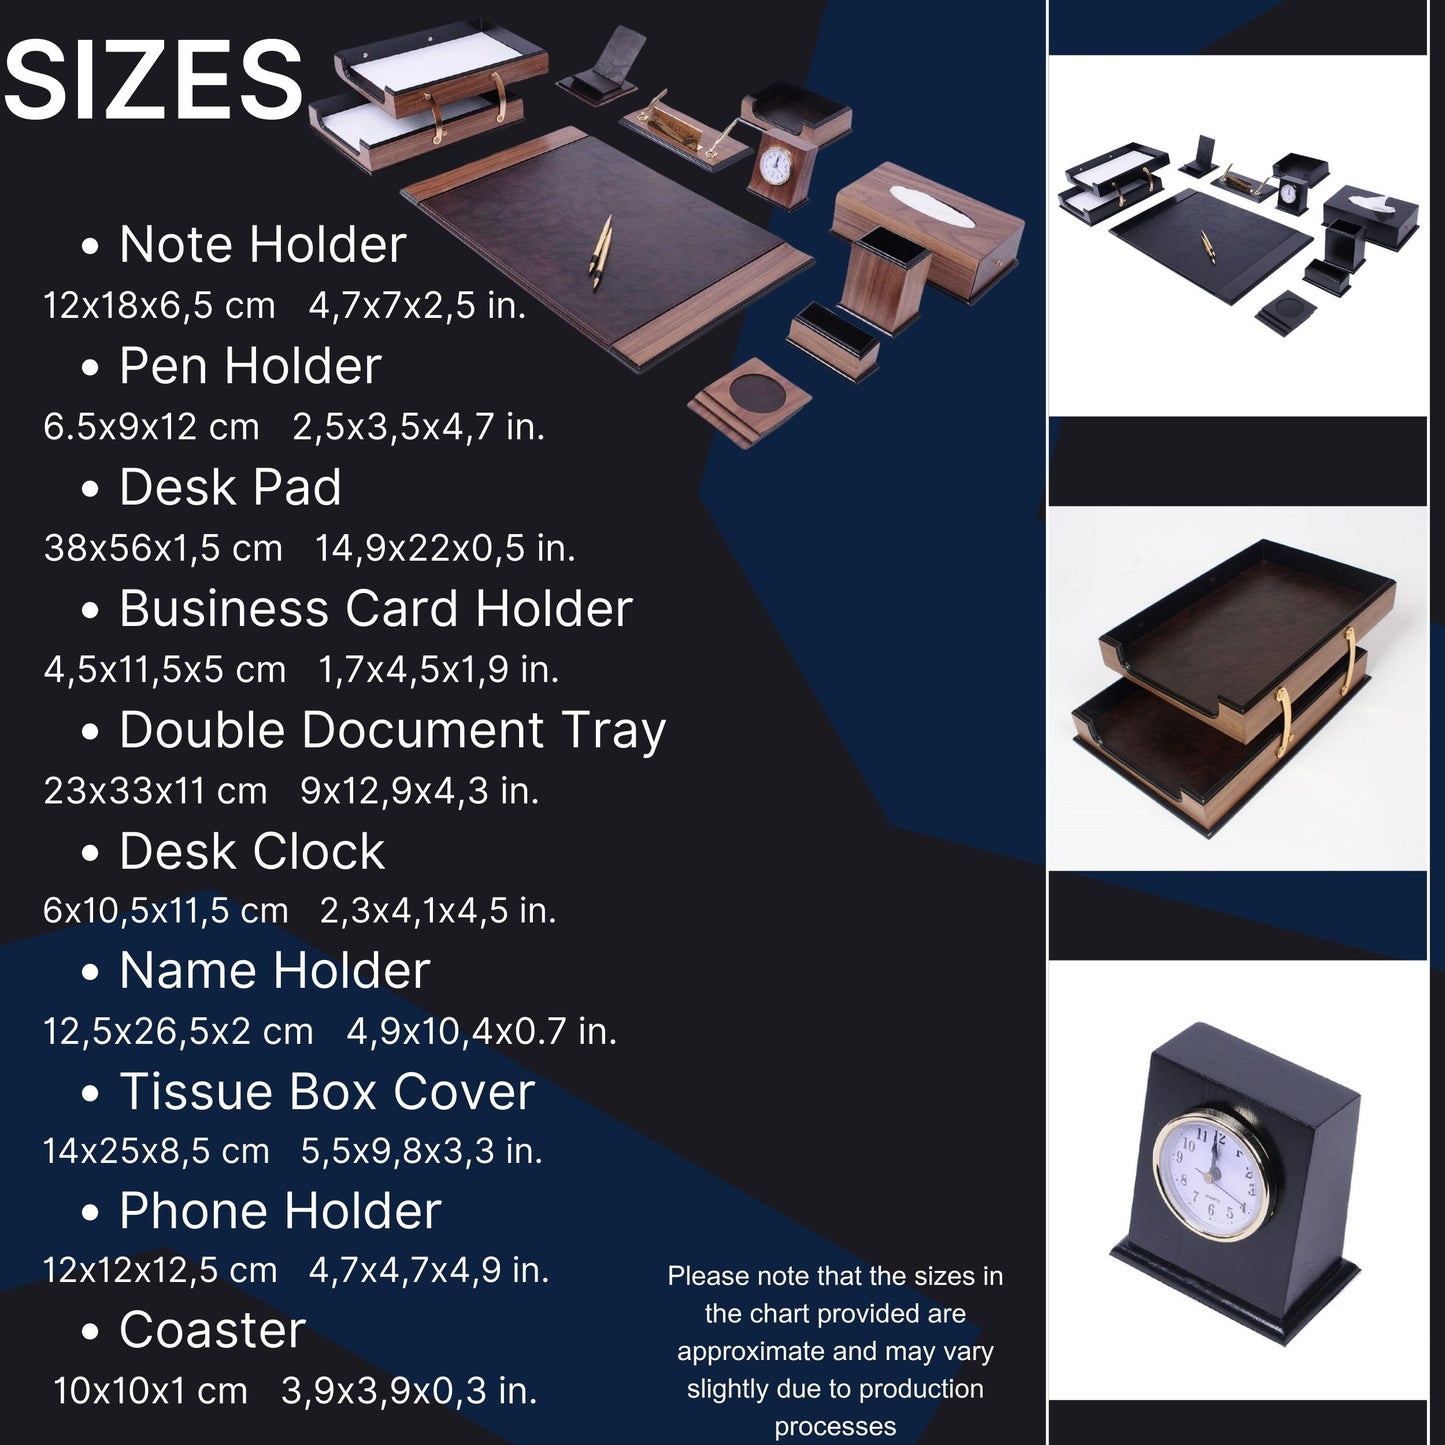 MOOG Wooden Prestige Black Desk Set - 8 PCS